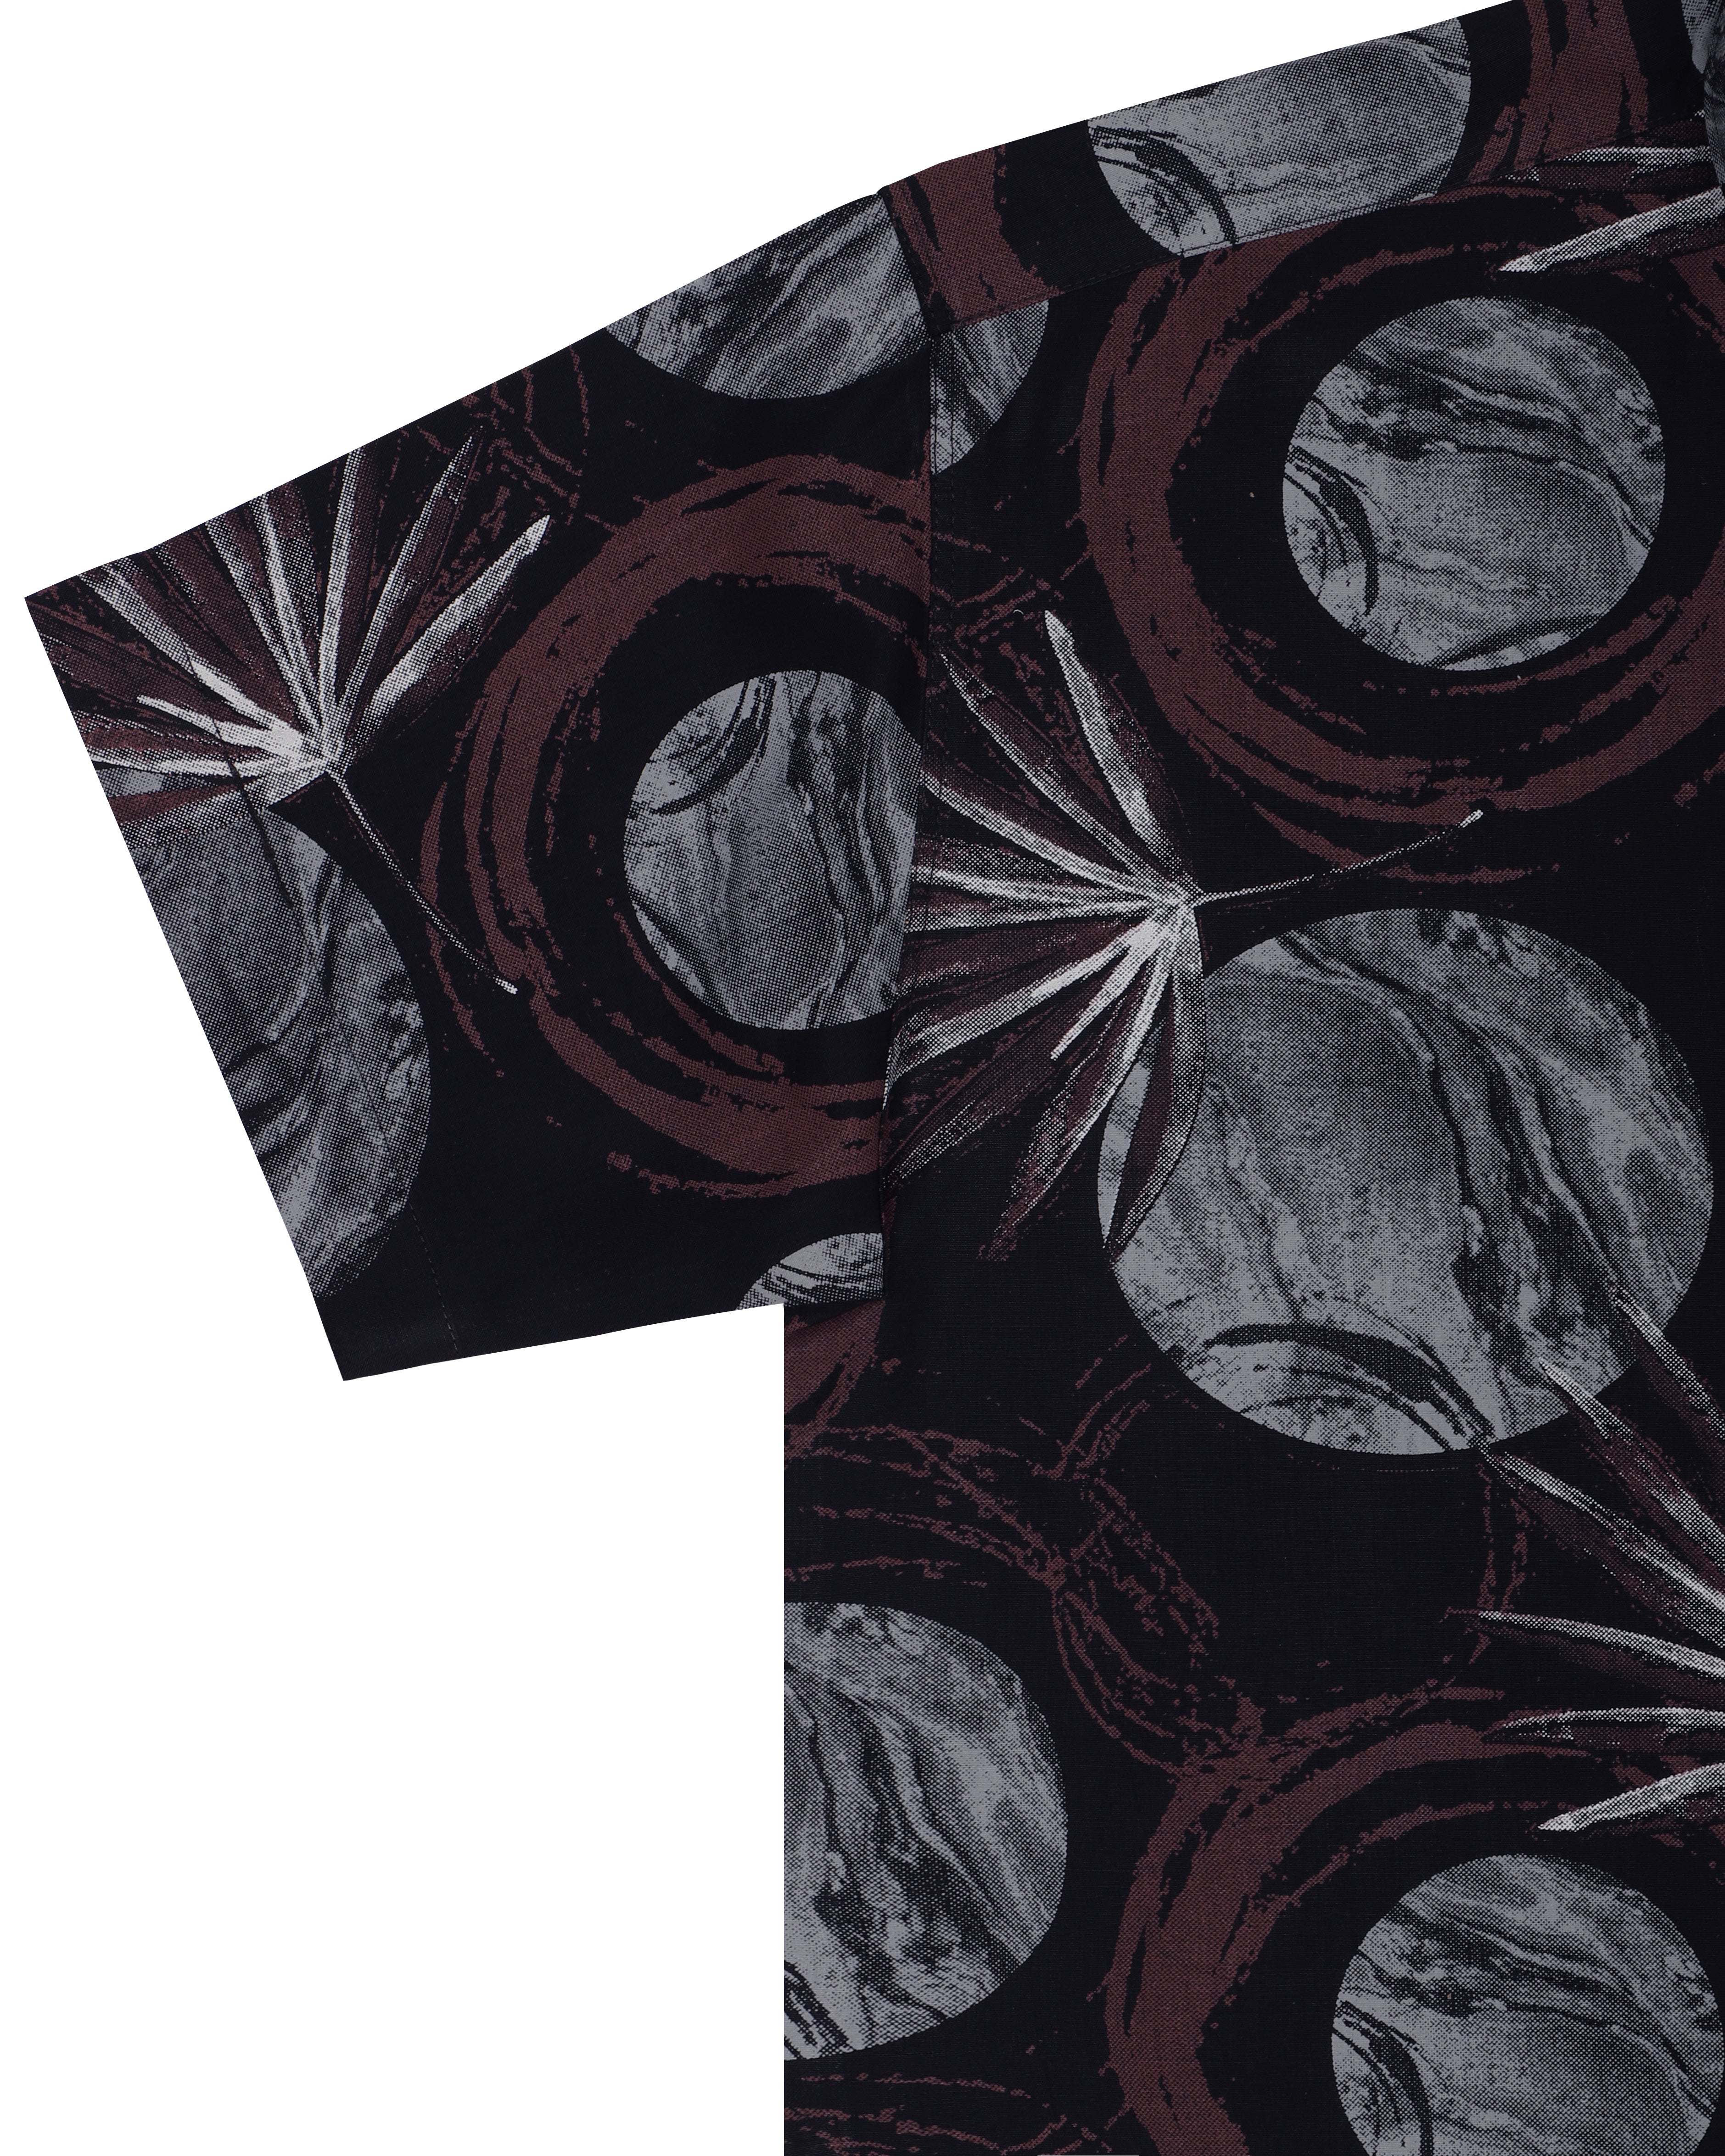 Half Sleeve's Black Floral print